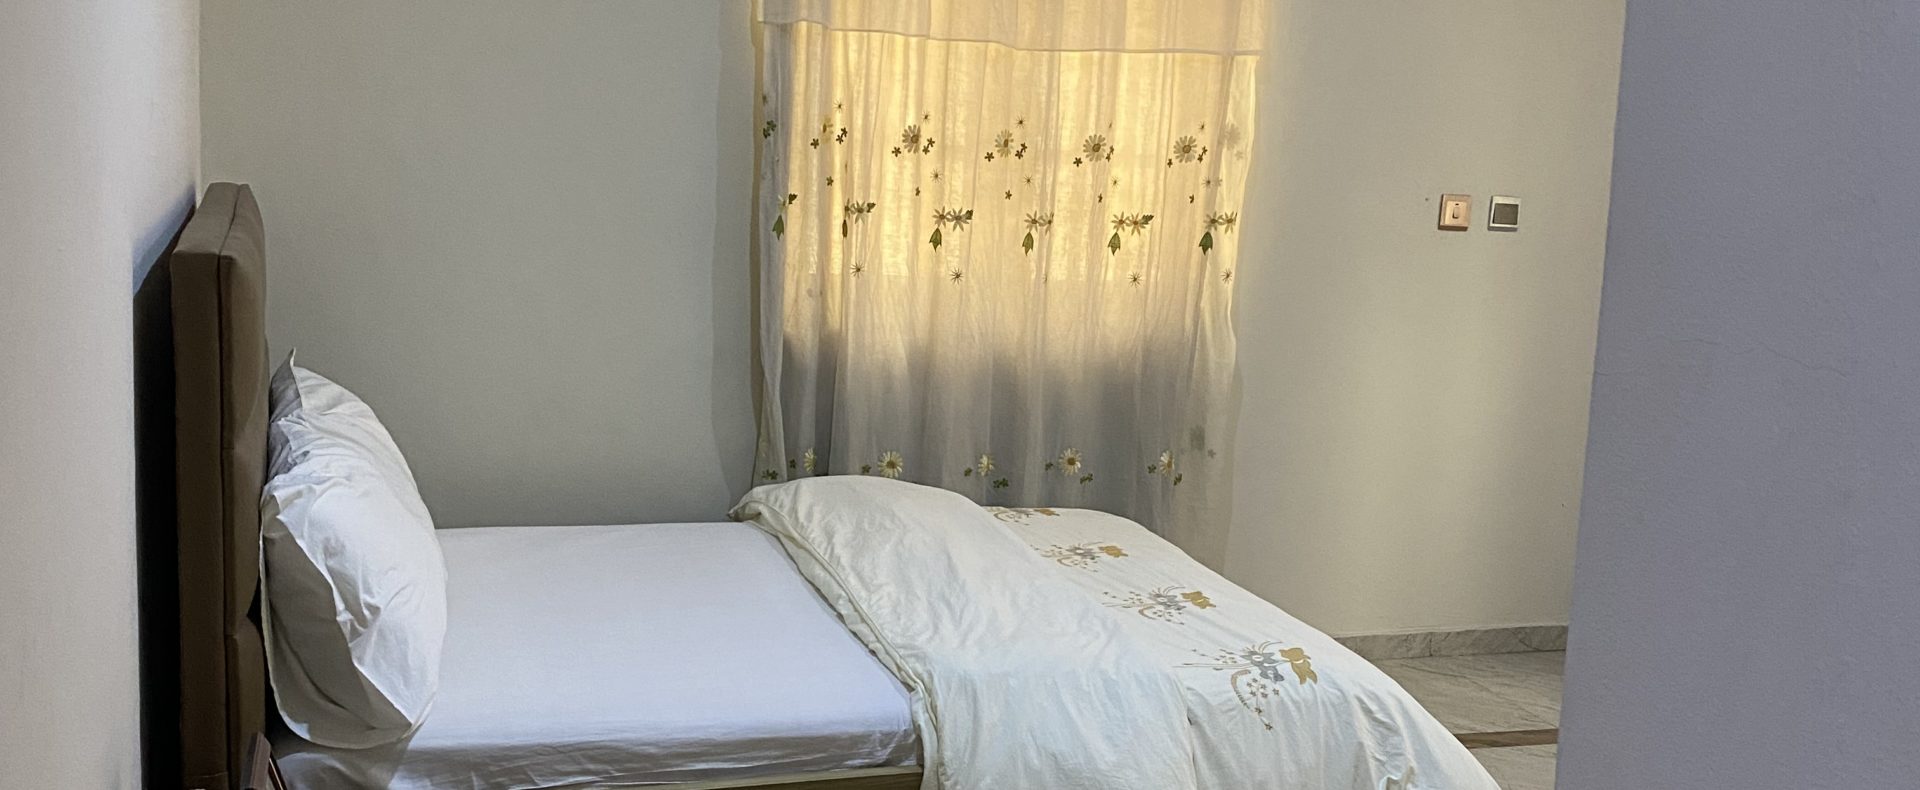 Lovely 2 Bedroom Rental Unit In Sangotedo Lagos Nigeria